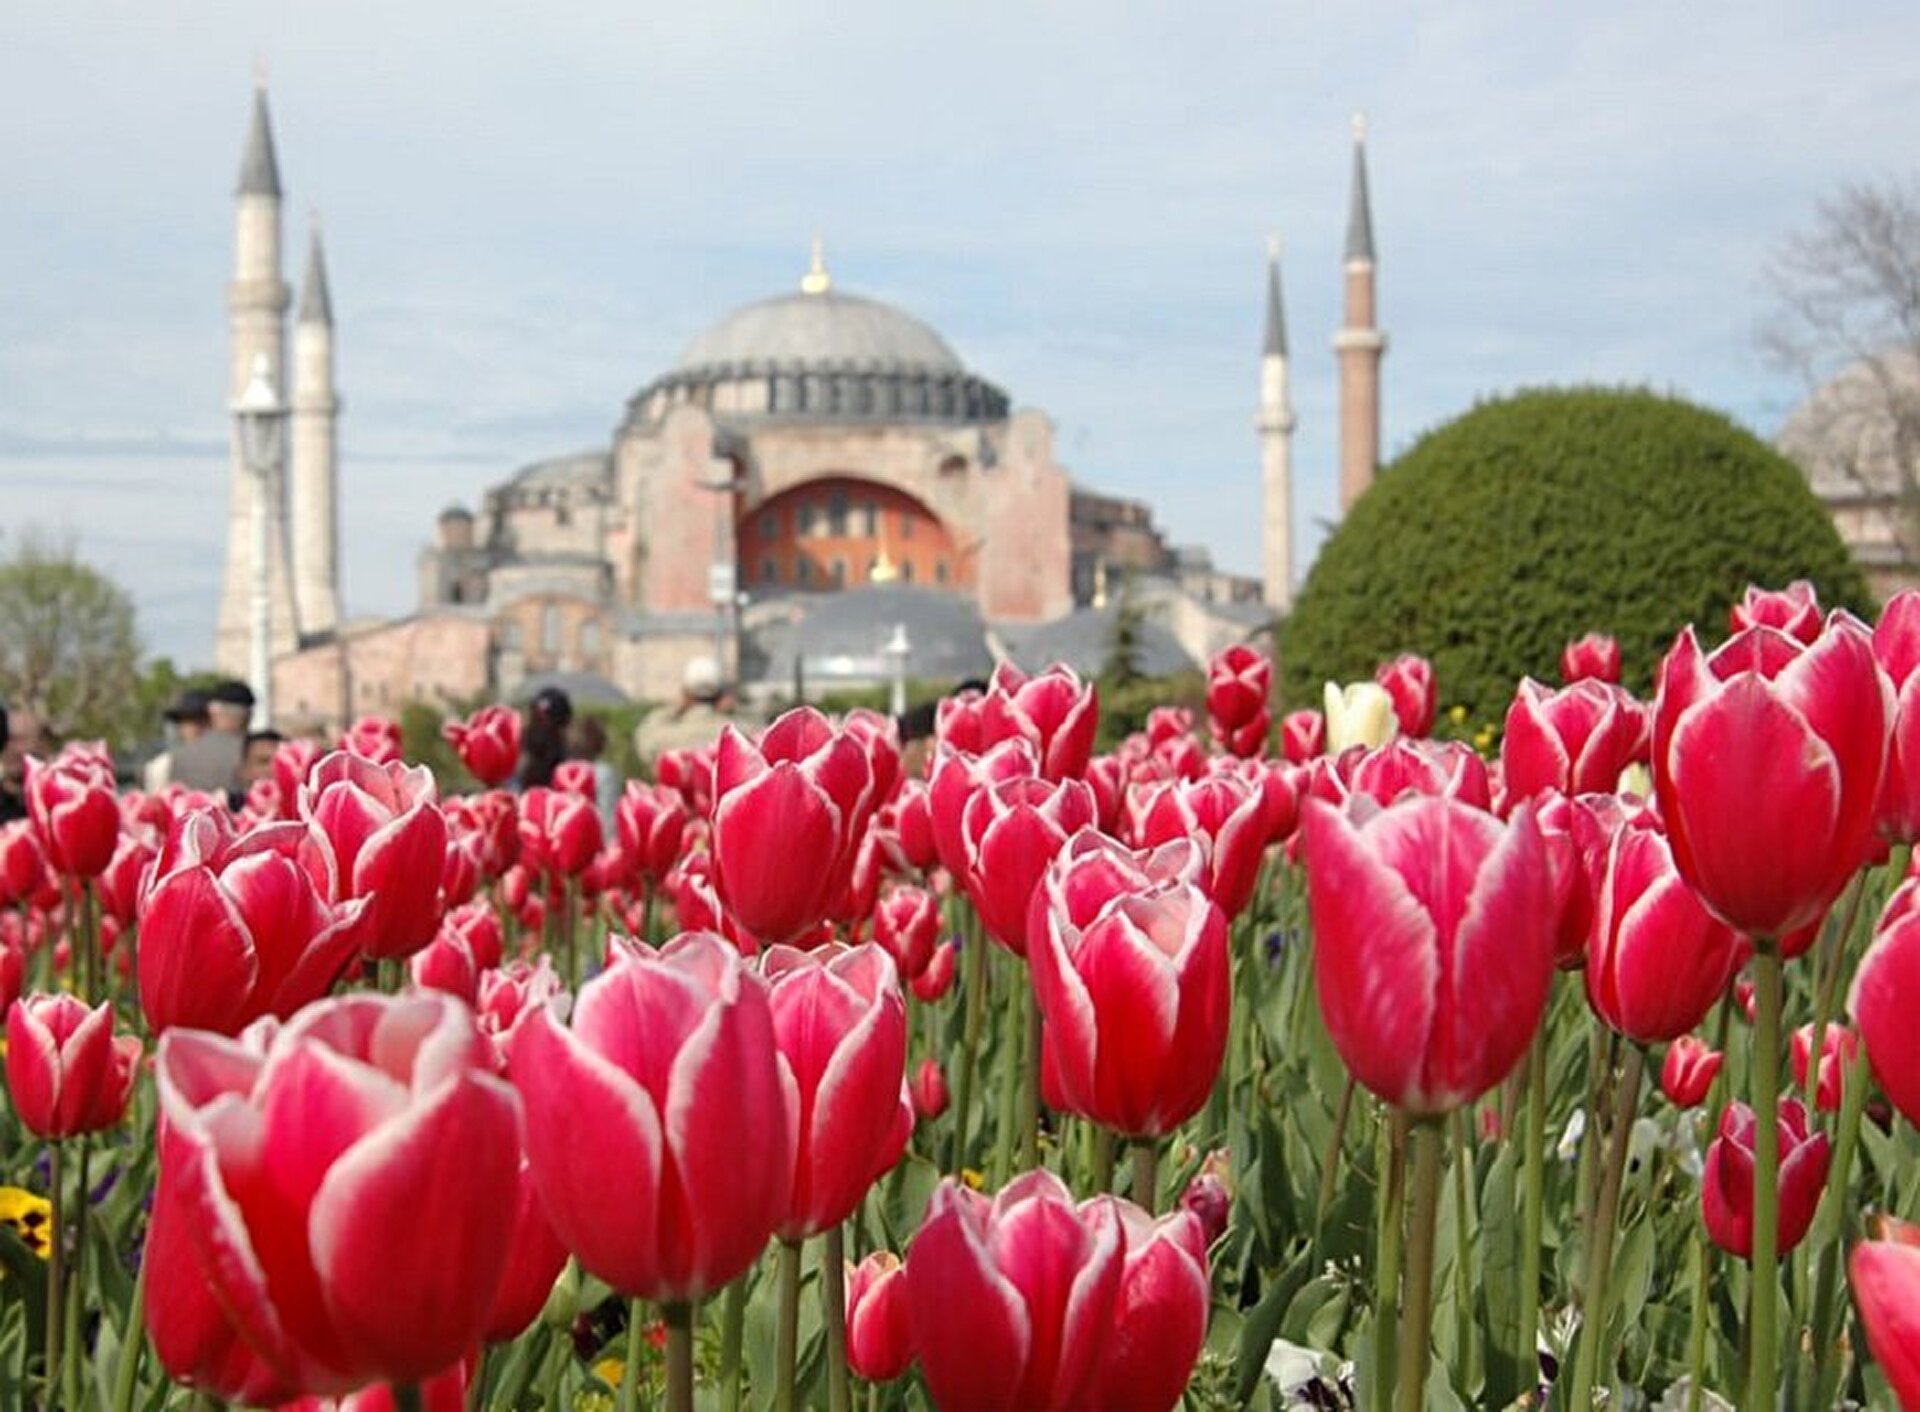 Стамбул весной. Стамбул фестиваль тюльпанов Султанахмет. Турция Стамбул цветение тюльпанов. Стамбул Эмирган тюльпаны. Фестиваль тюльпанов в Стамбуле Эмирган.